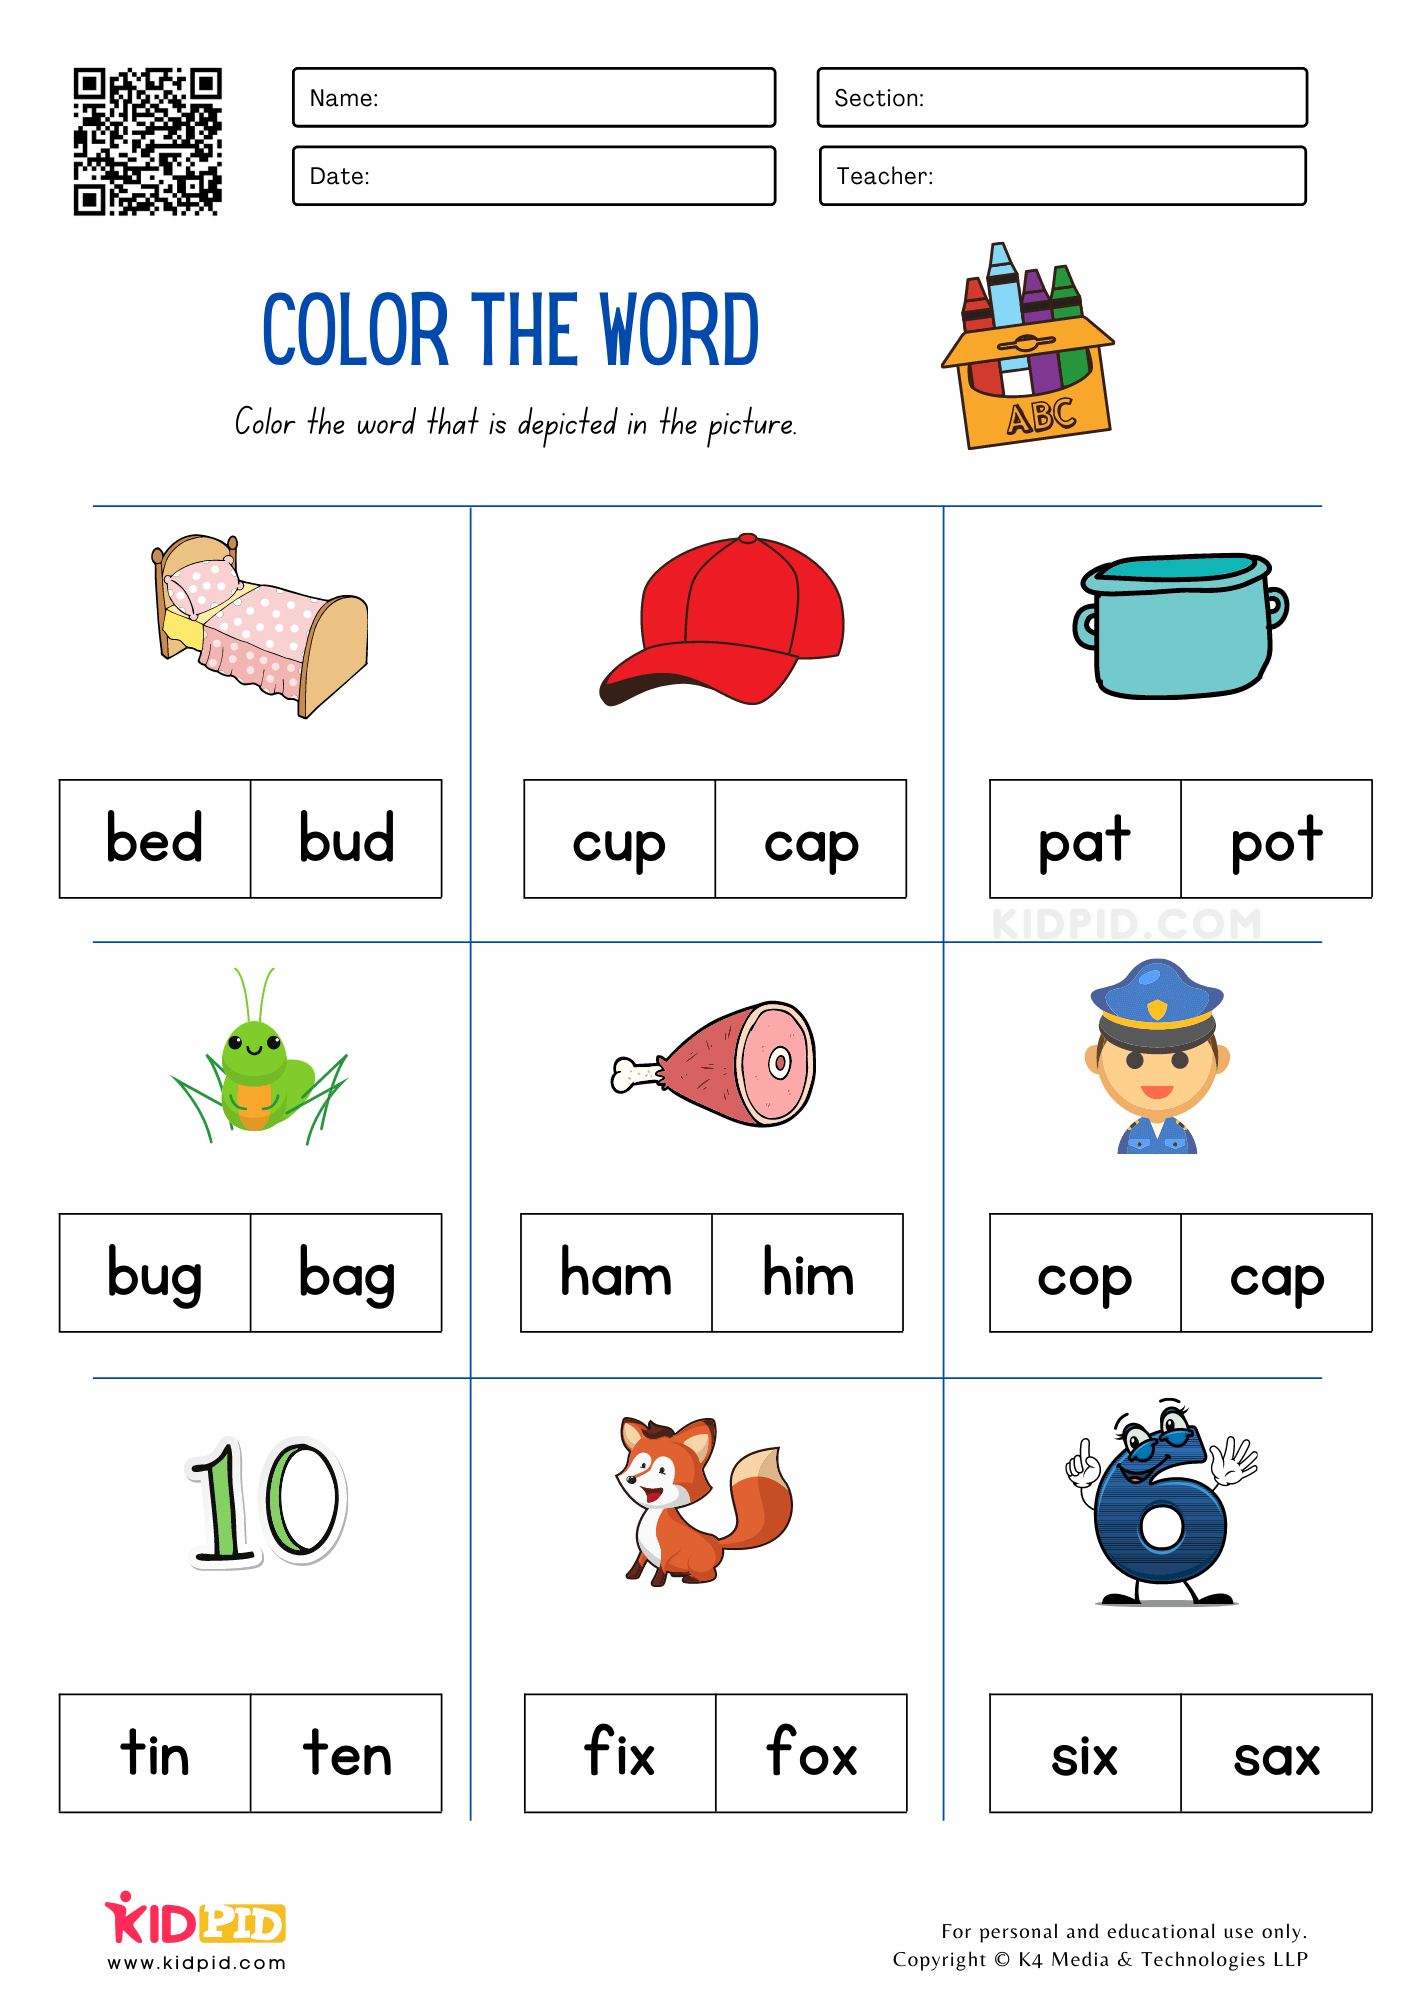 CVC Color the Word Worksheets for Kids - Kidpid